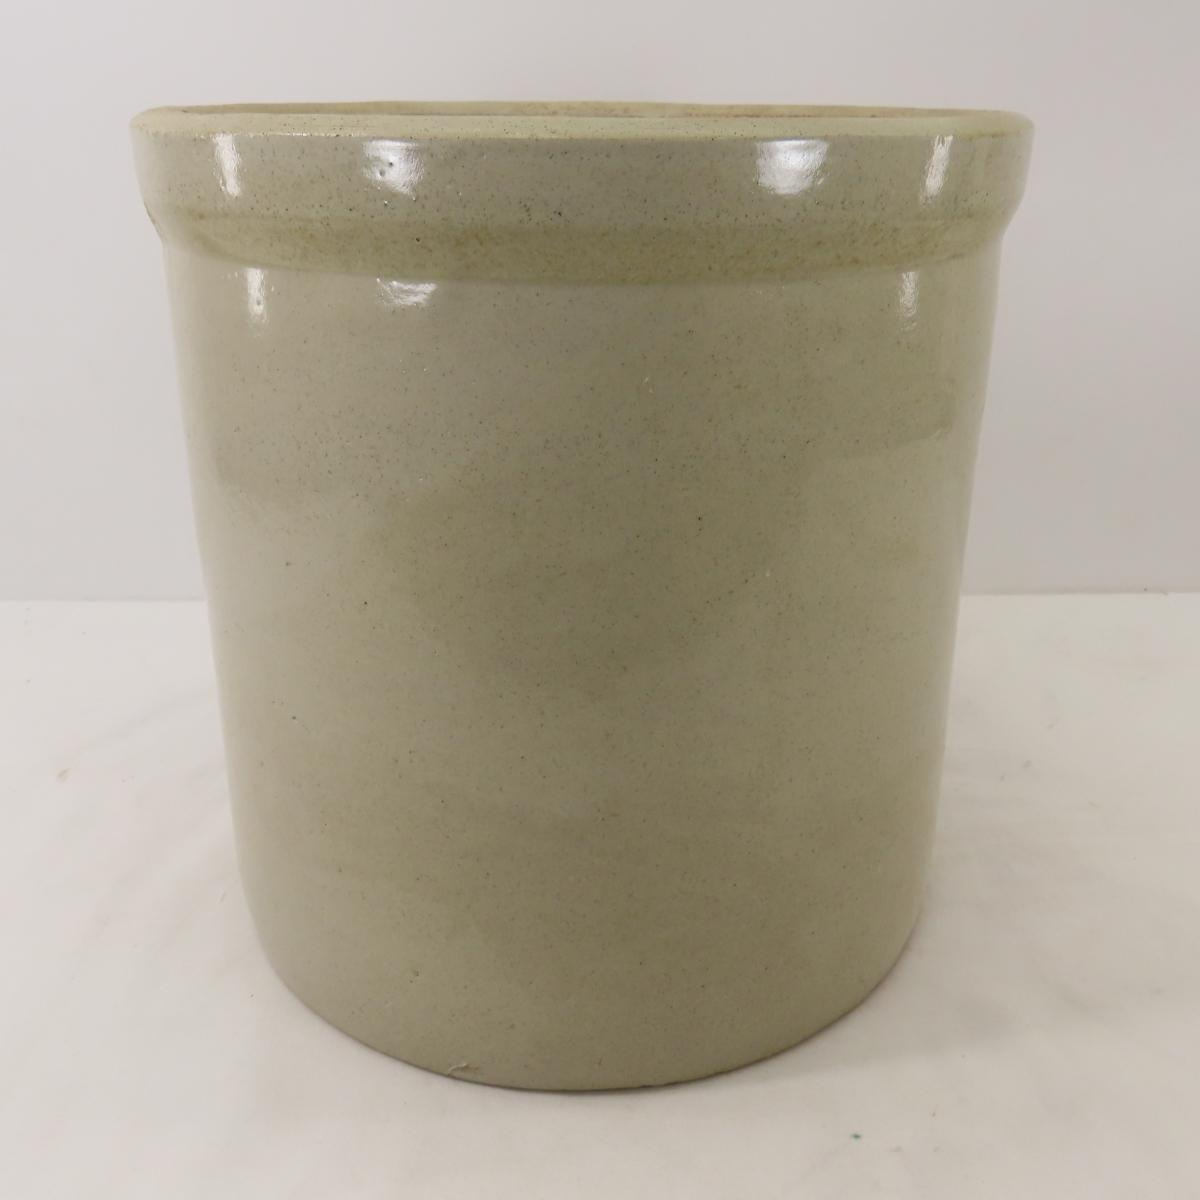 5 gallon Western Stoneware crock